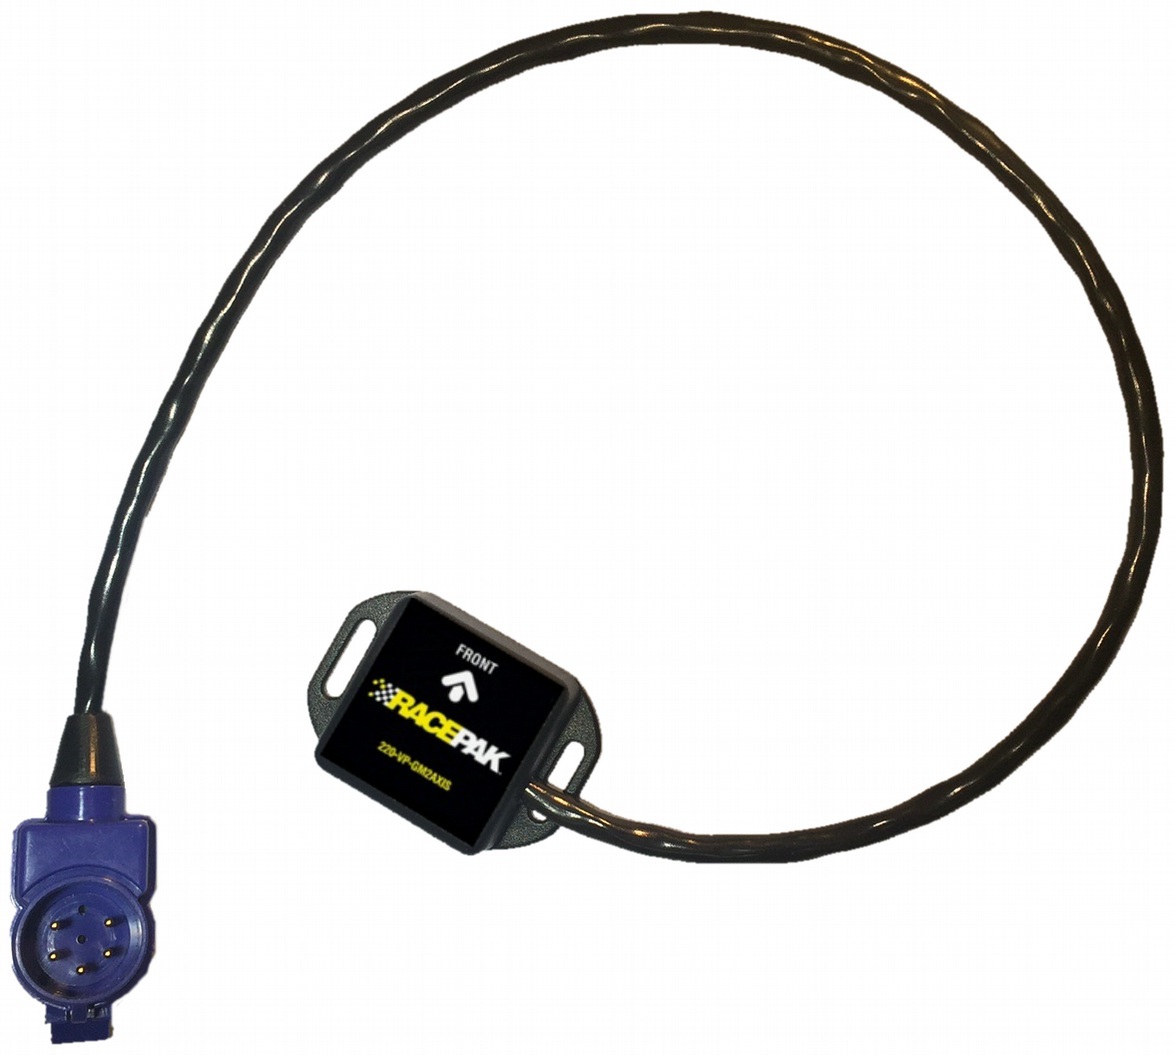 Racepak 220-VP-GM2AXIS G-Meter, Harness Included, Plastic, Black, Racepak V-Net Display or Logger Dash, Each